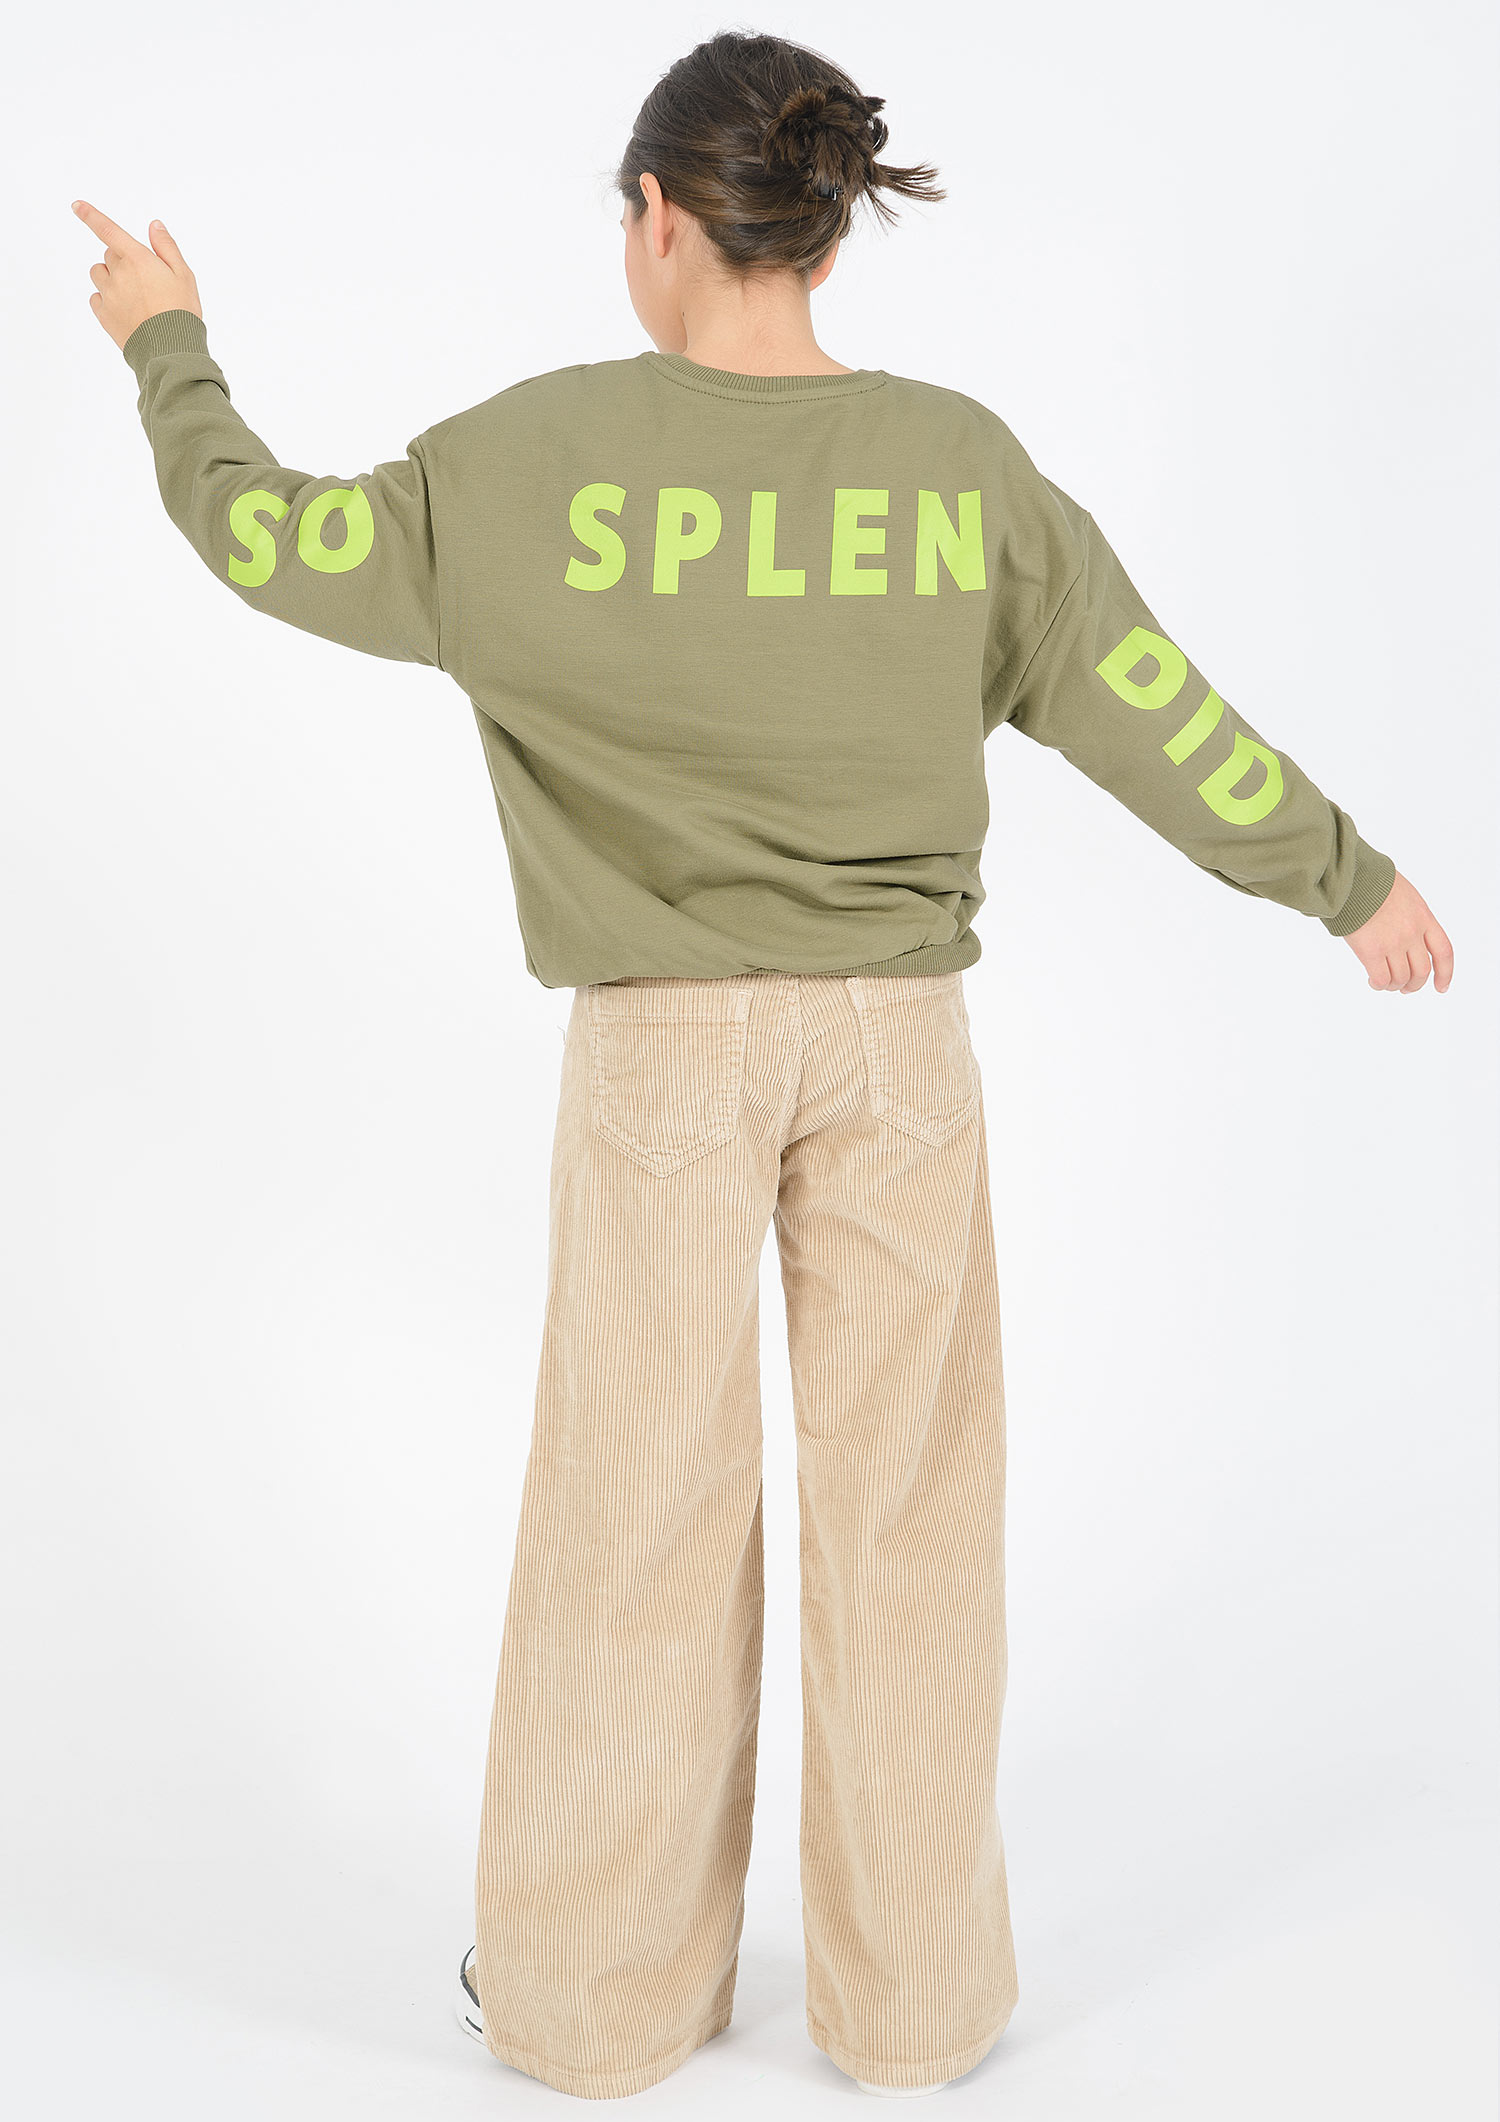 5896-Girls Sweatshirt -So Splendid